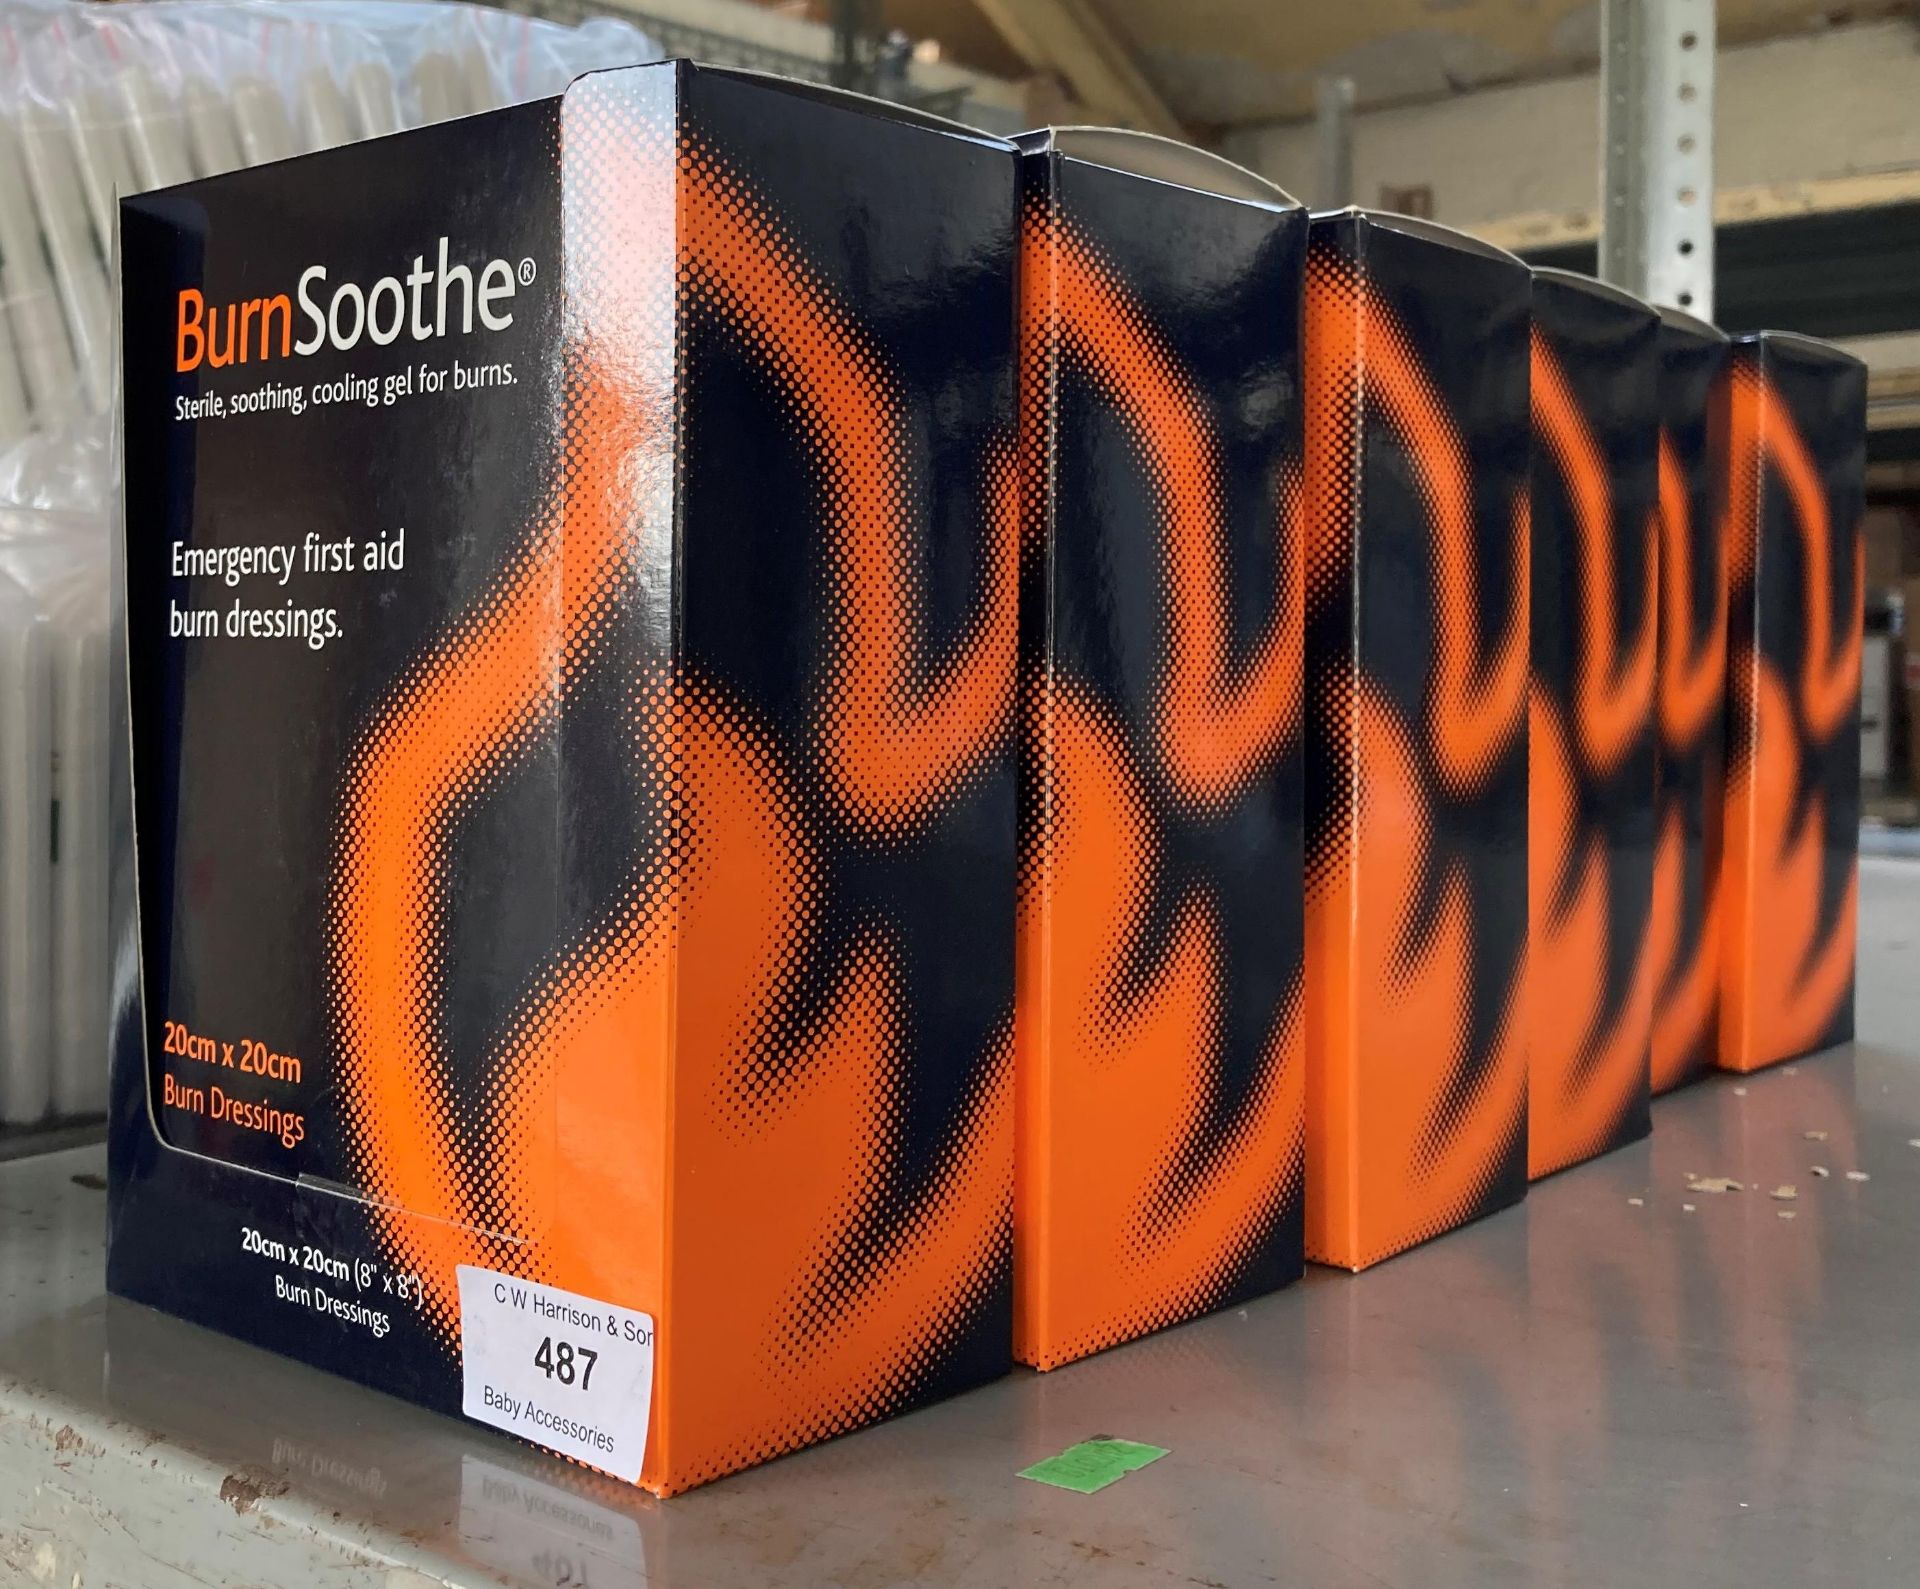 6 x boxes of 5 BurnSooth burn dressings (20cm x 20cm) (saleroom location: Sunnybank Street, - Image 2 of 3